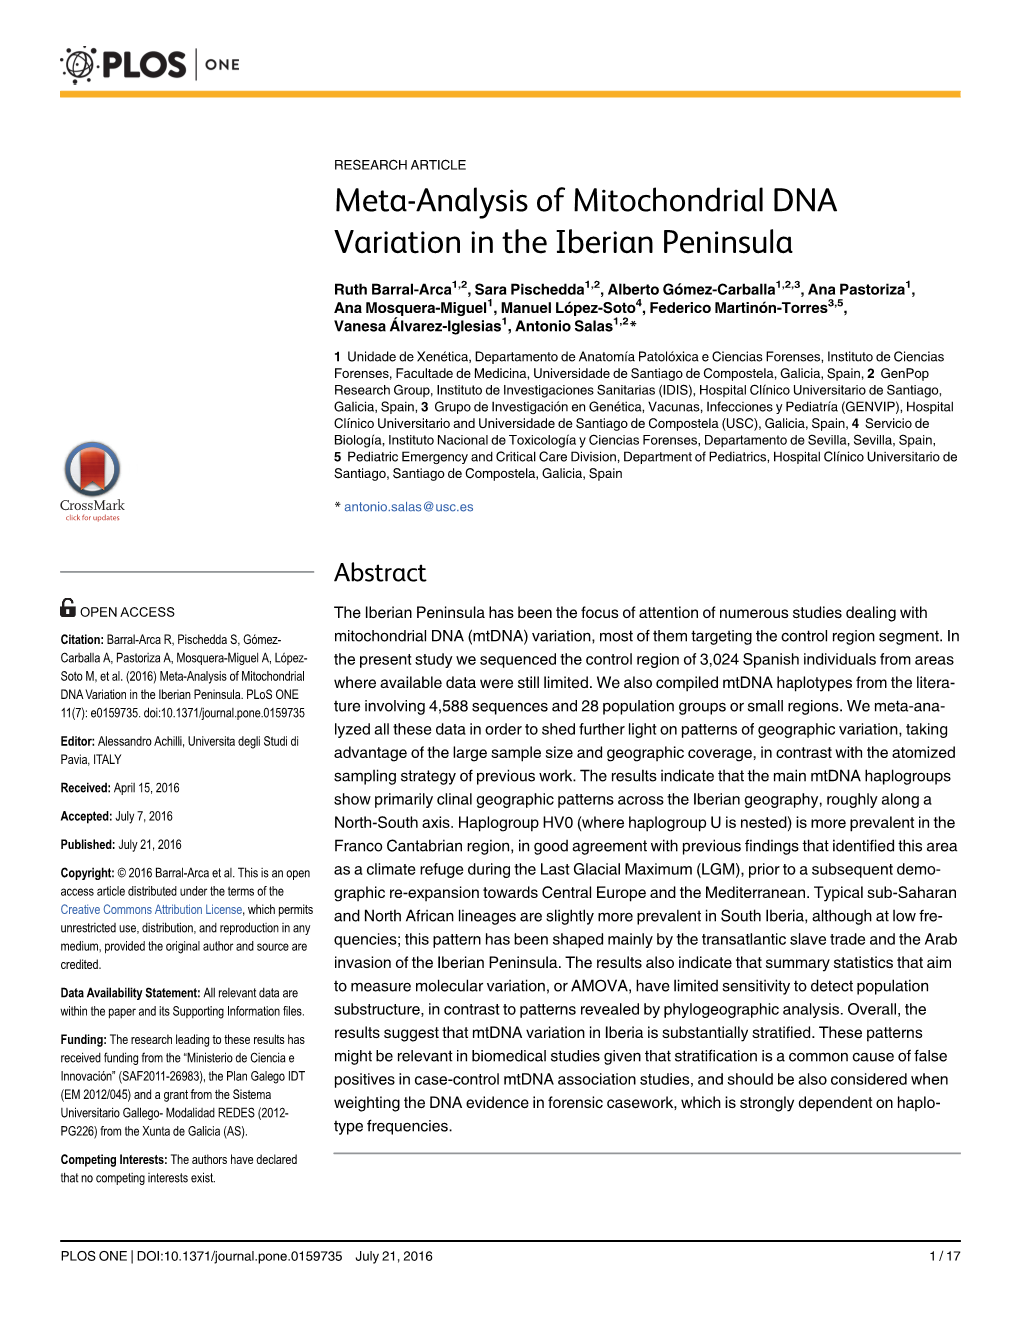 Meta-Analysis of Mitochondrial DNA Variation in the Iberian Peninsula